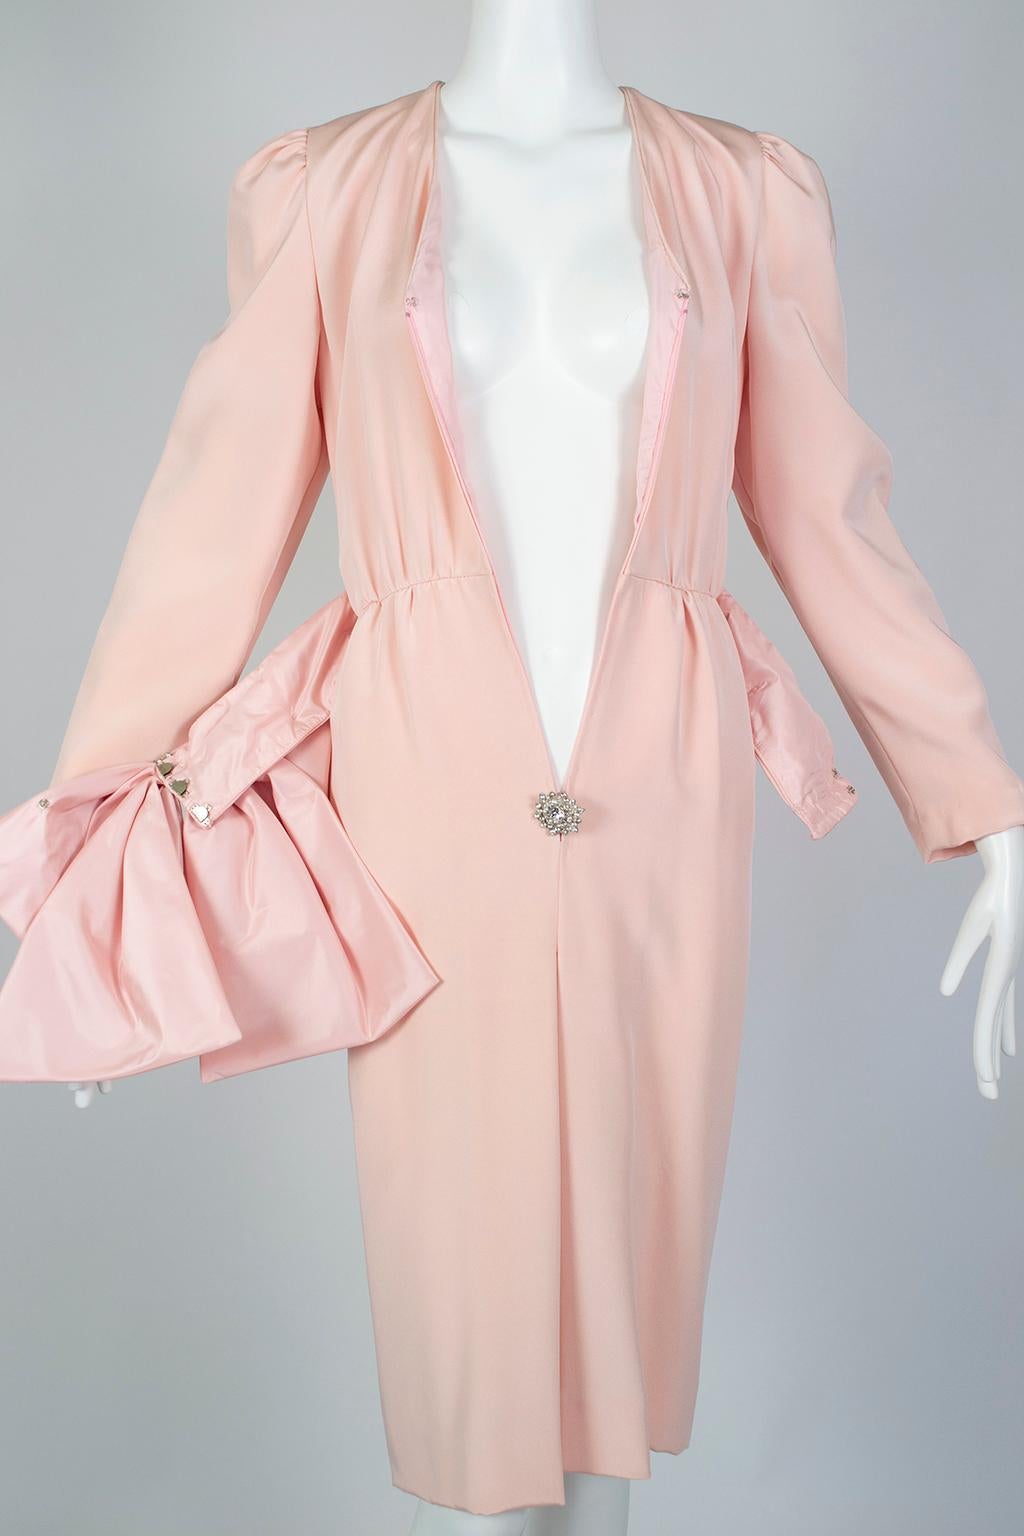 Akira Isogawa Pink Cocktail Dress with Oversize Jewel Cummerbund Bow – M, 1980s For Sale 5